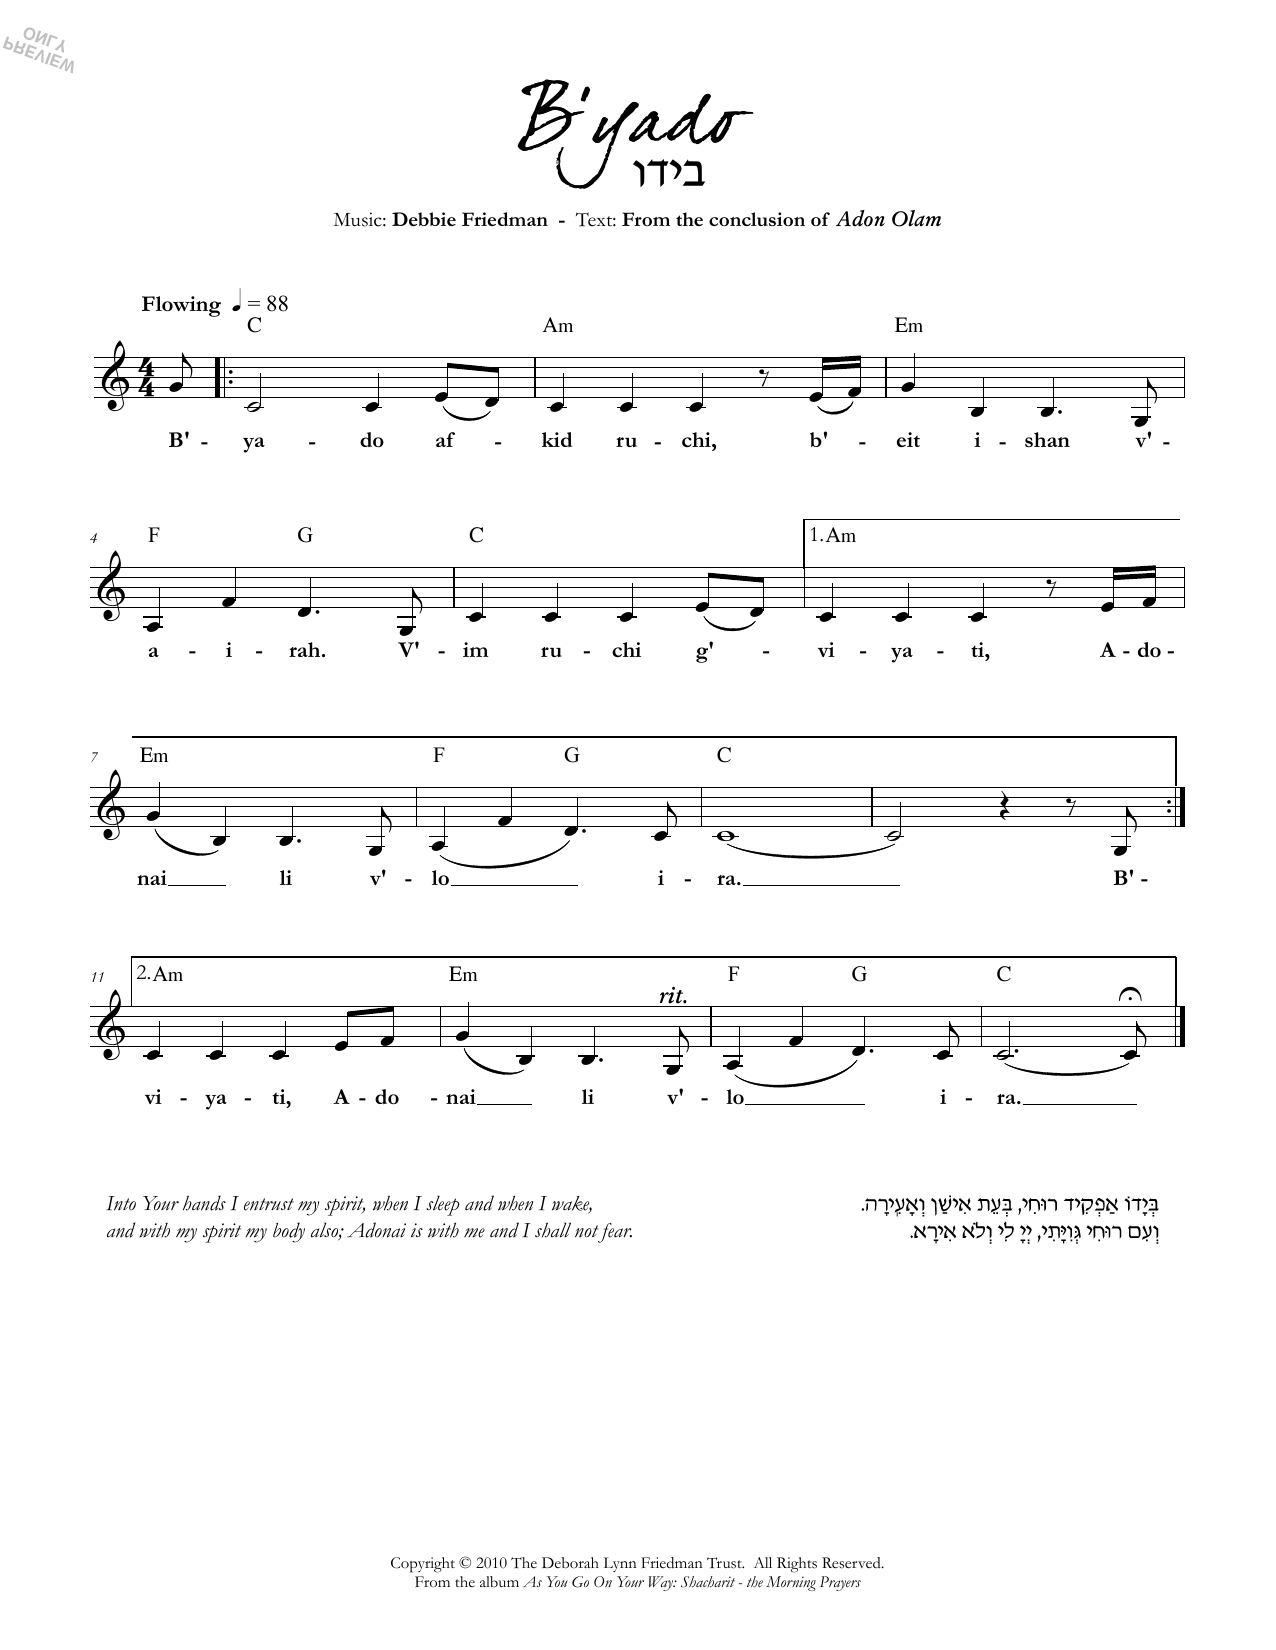 Download Debbie Friedman B'yado Sheet Music and learn how to play Lead Sheet / Fake Book PDF digital score in minutes